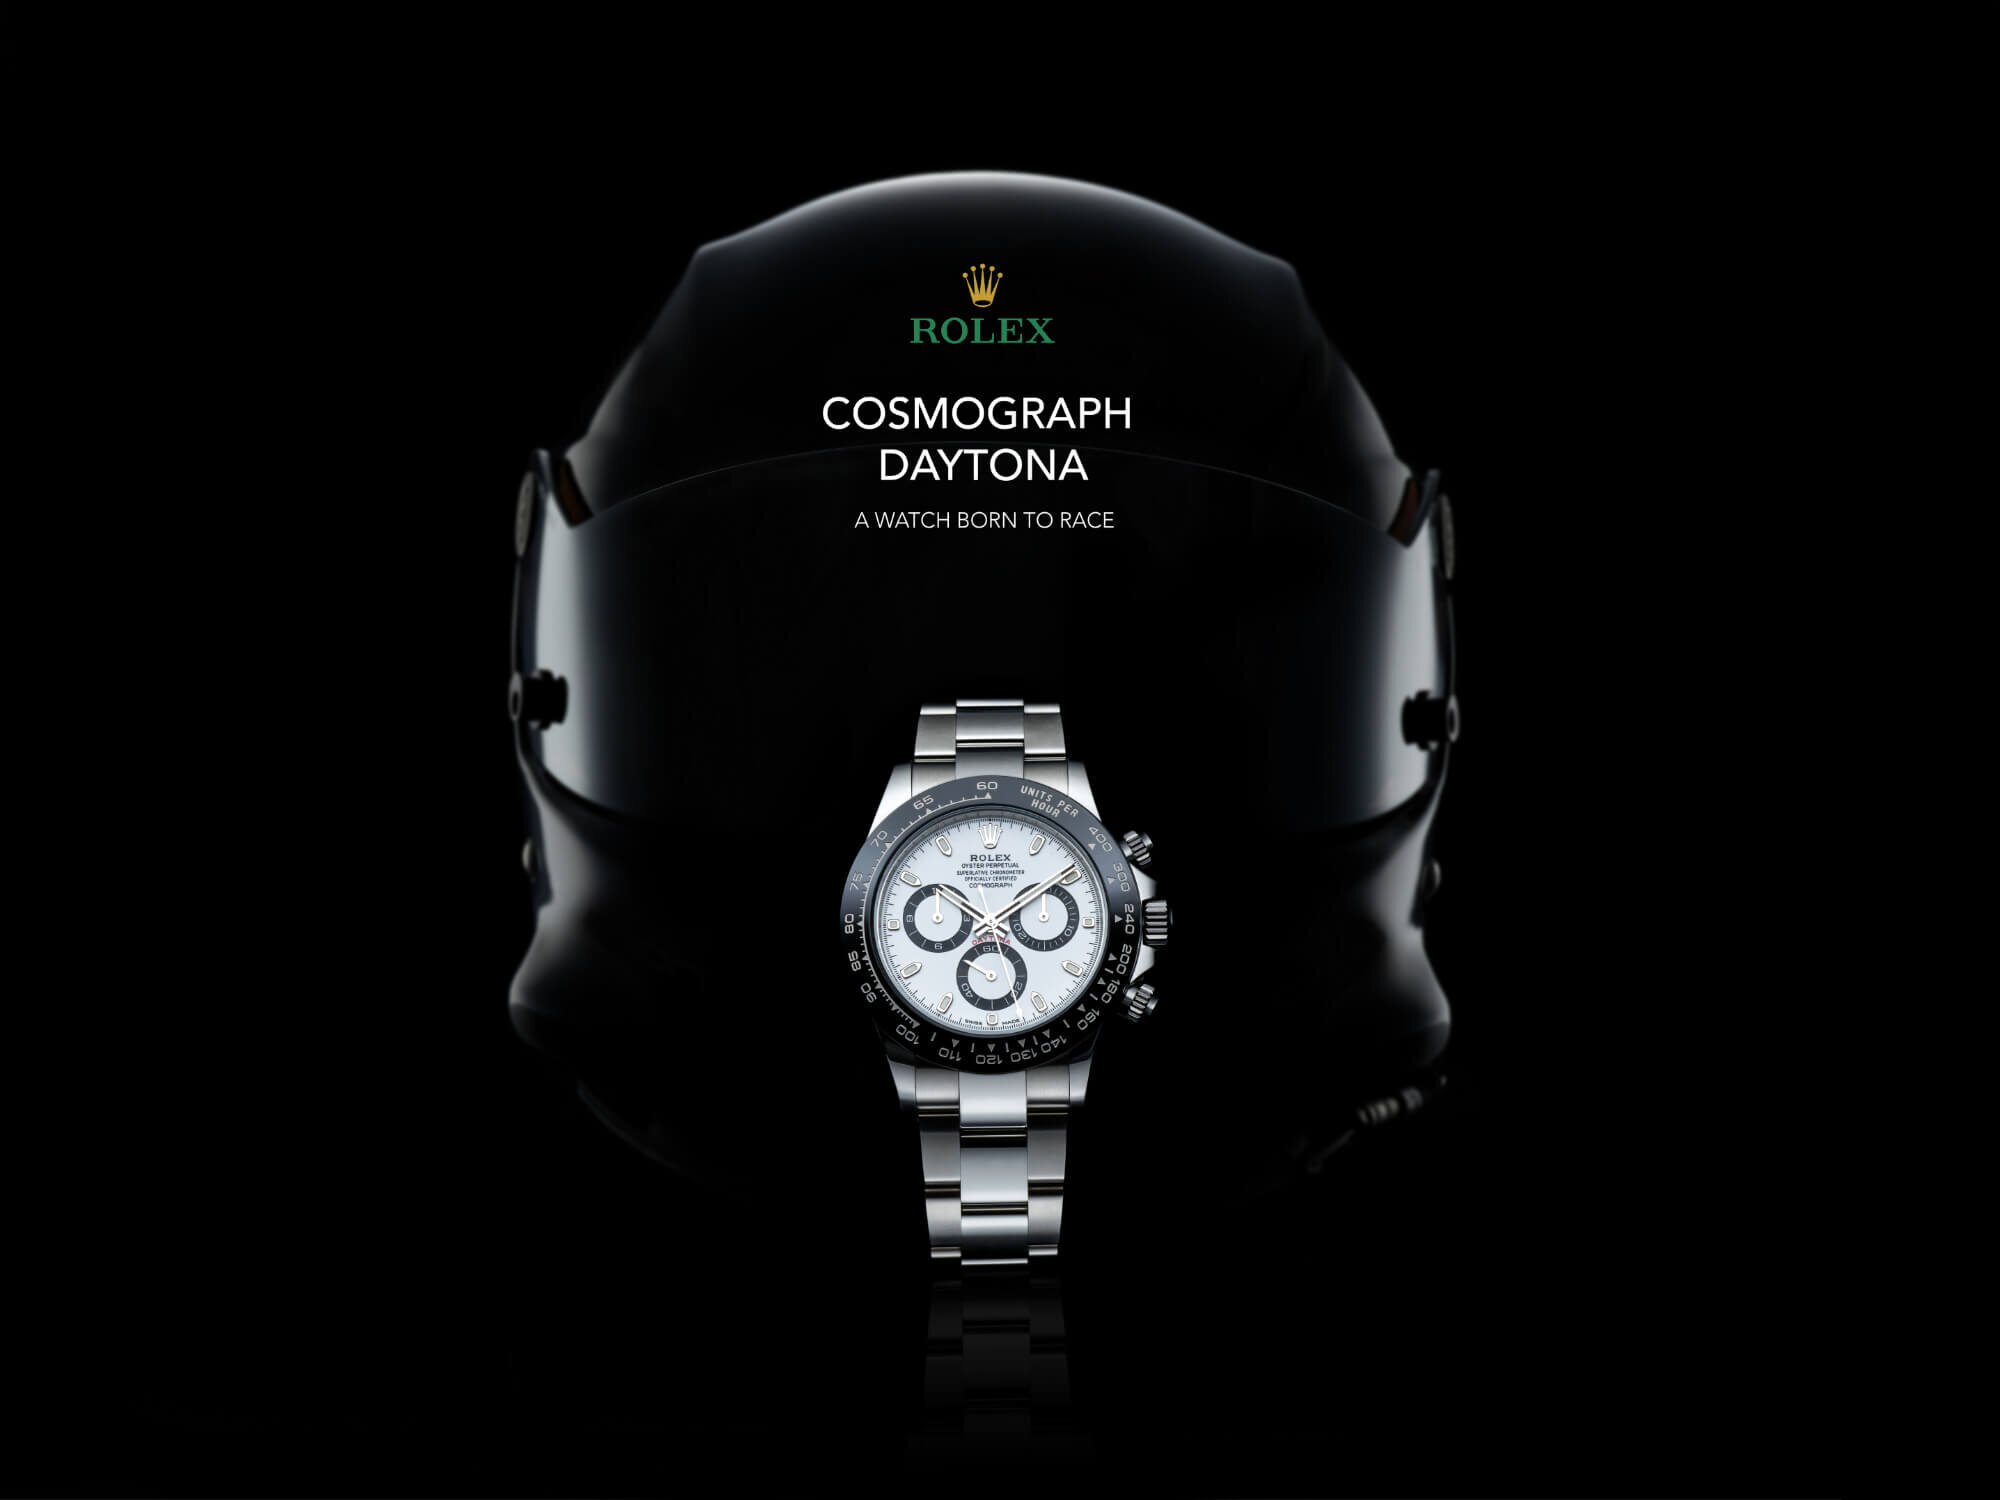 creatieve-commerciele-fotografie-rolex-daytona-high-end-product-photography-watches-horloges.jpg